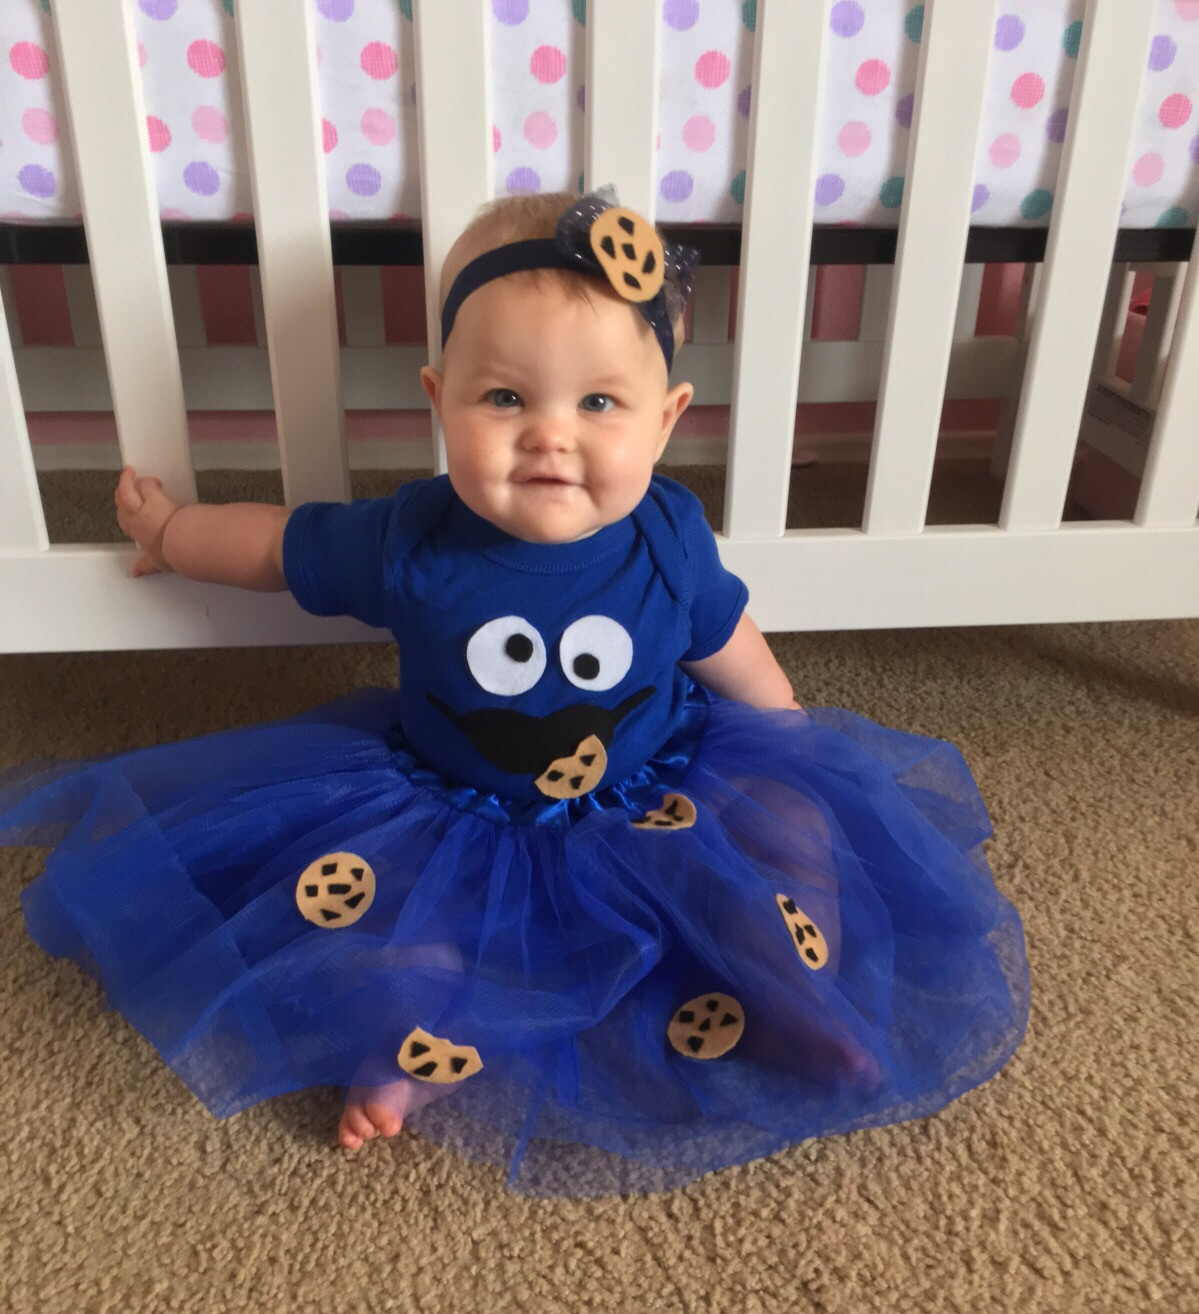 Cookie Monster Costume DIY
 DIY Cookie Monster costume baby & toddler no sewing